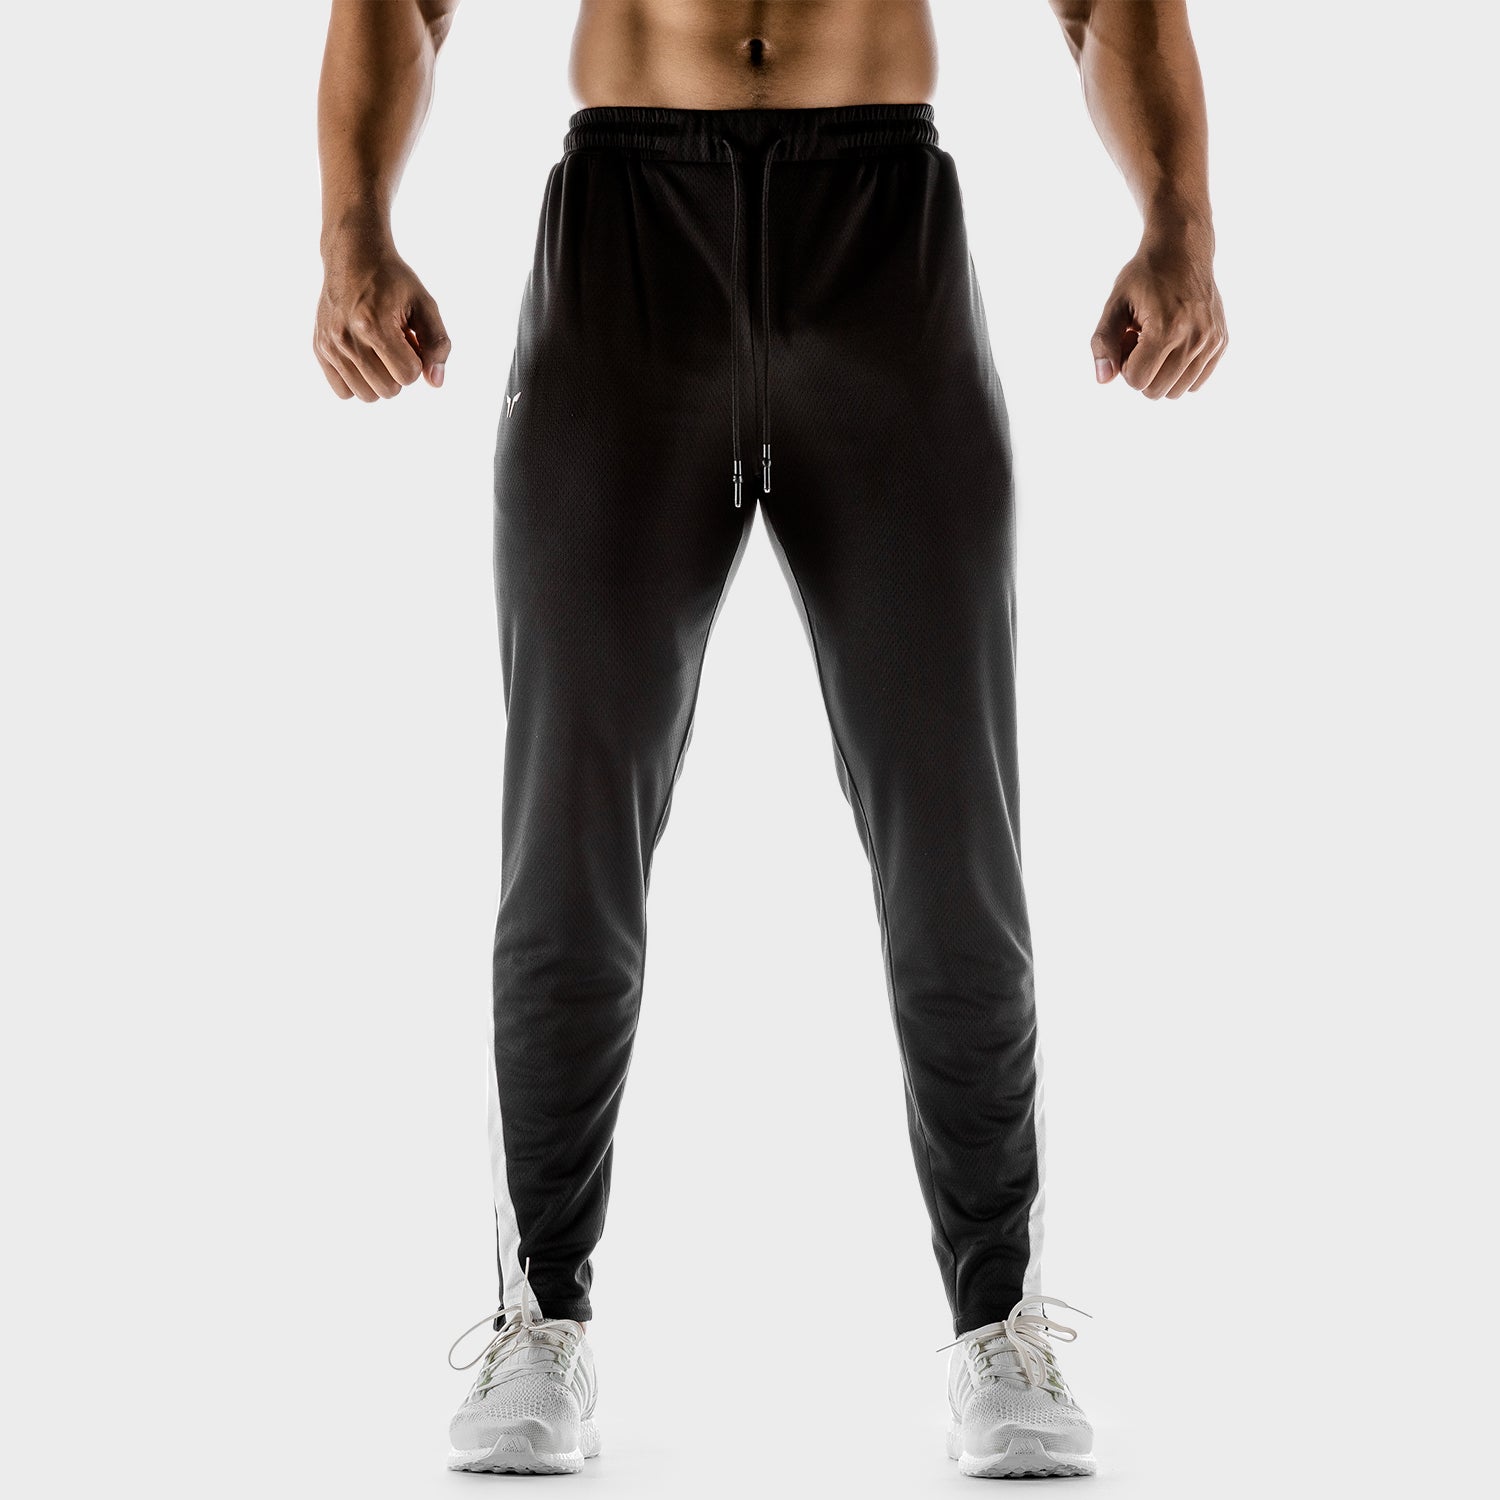 squatwolf-gym-wear-hybrid-2-0-track-pants-black-workout-pants-for-men